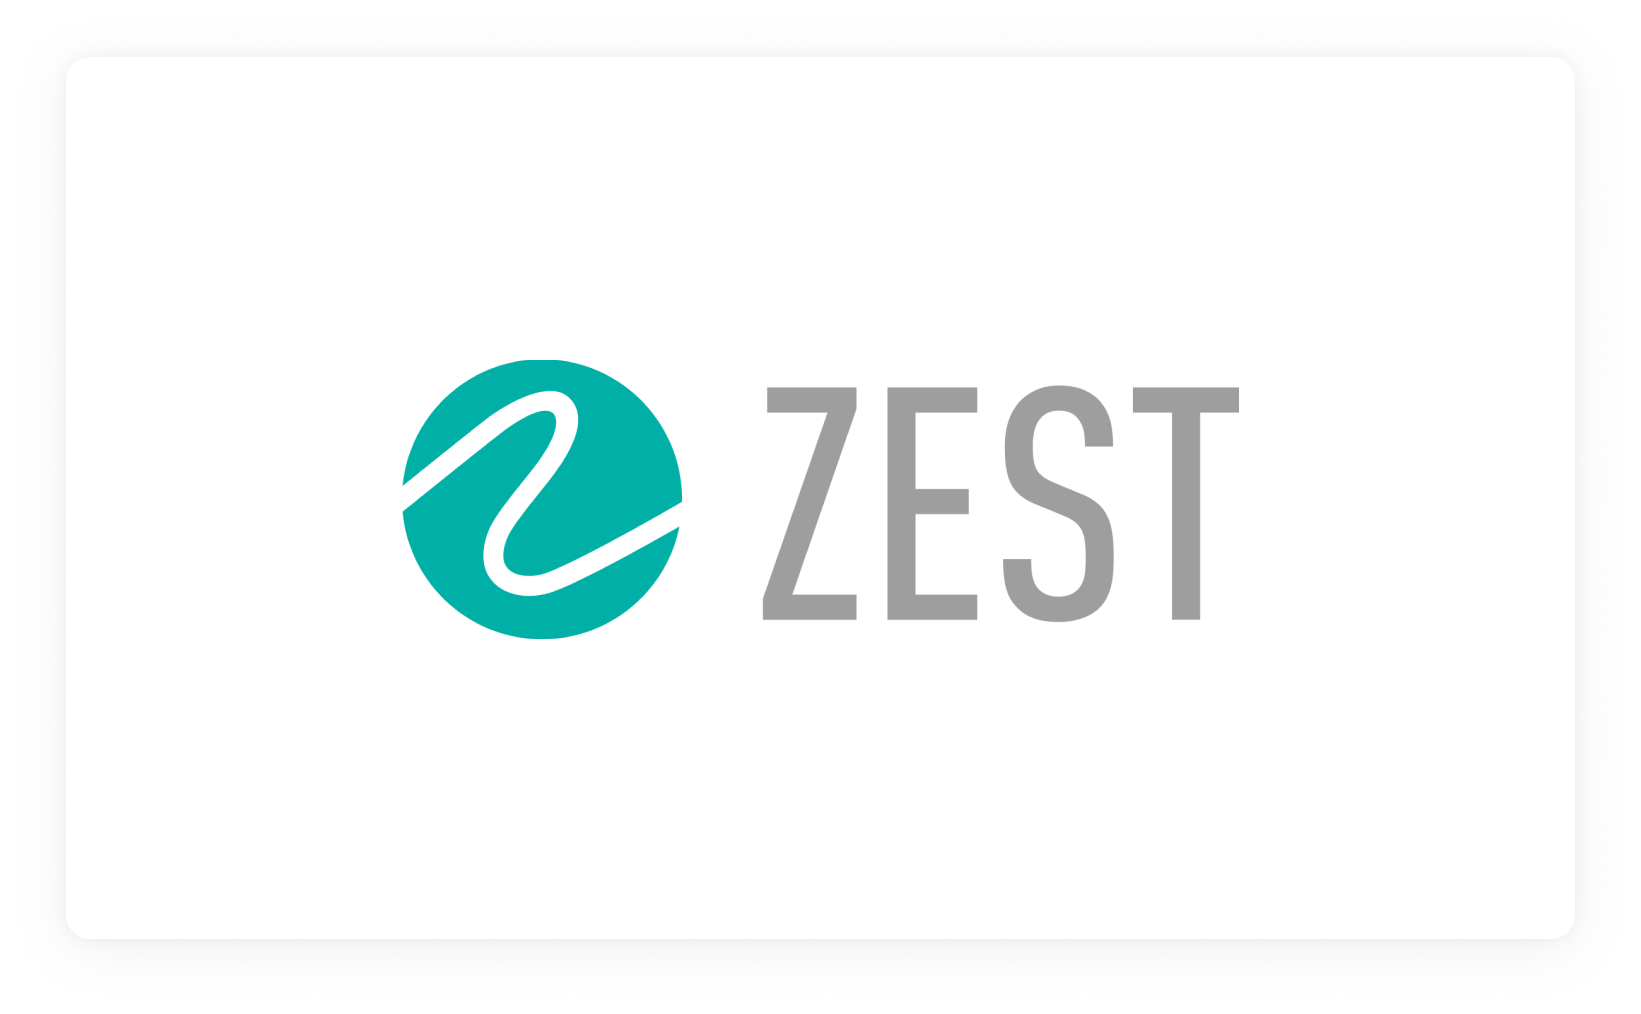 「ZEST」のロゴ画像